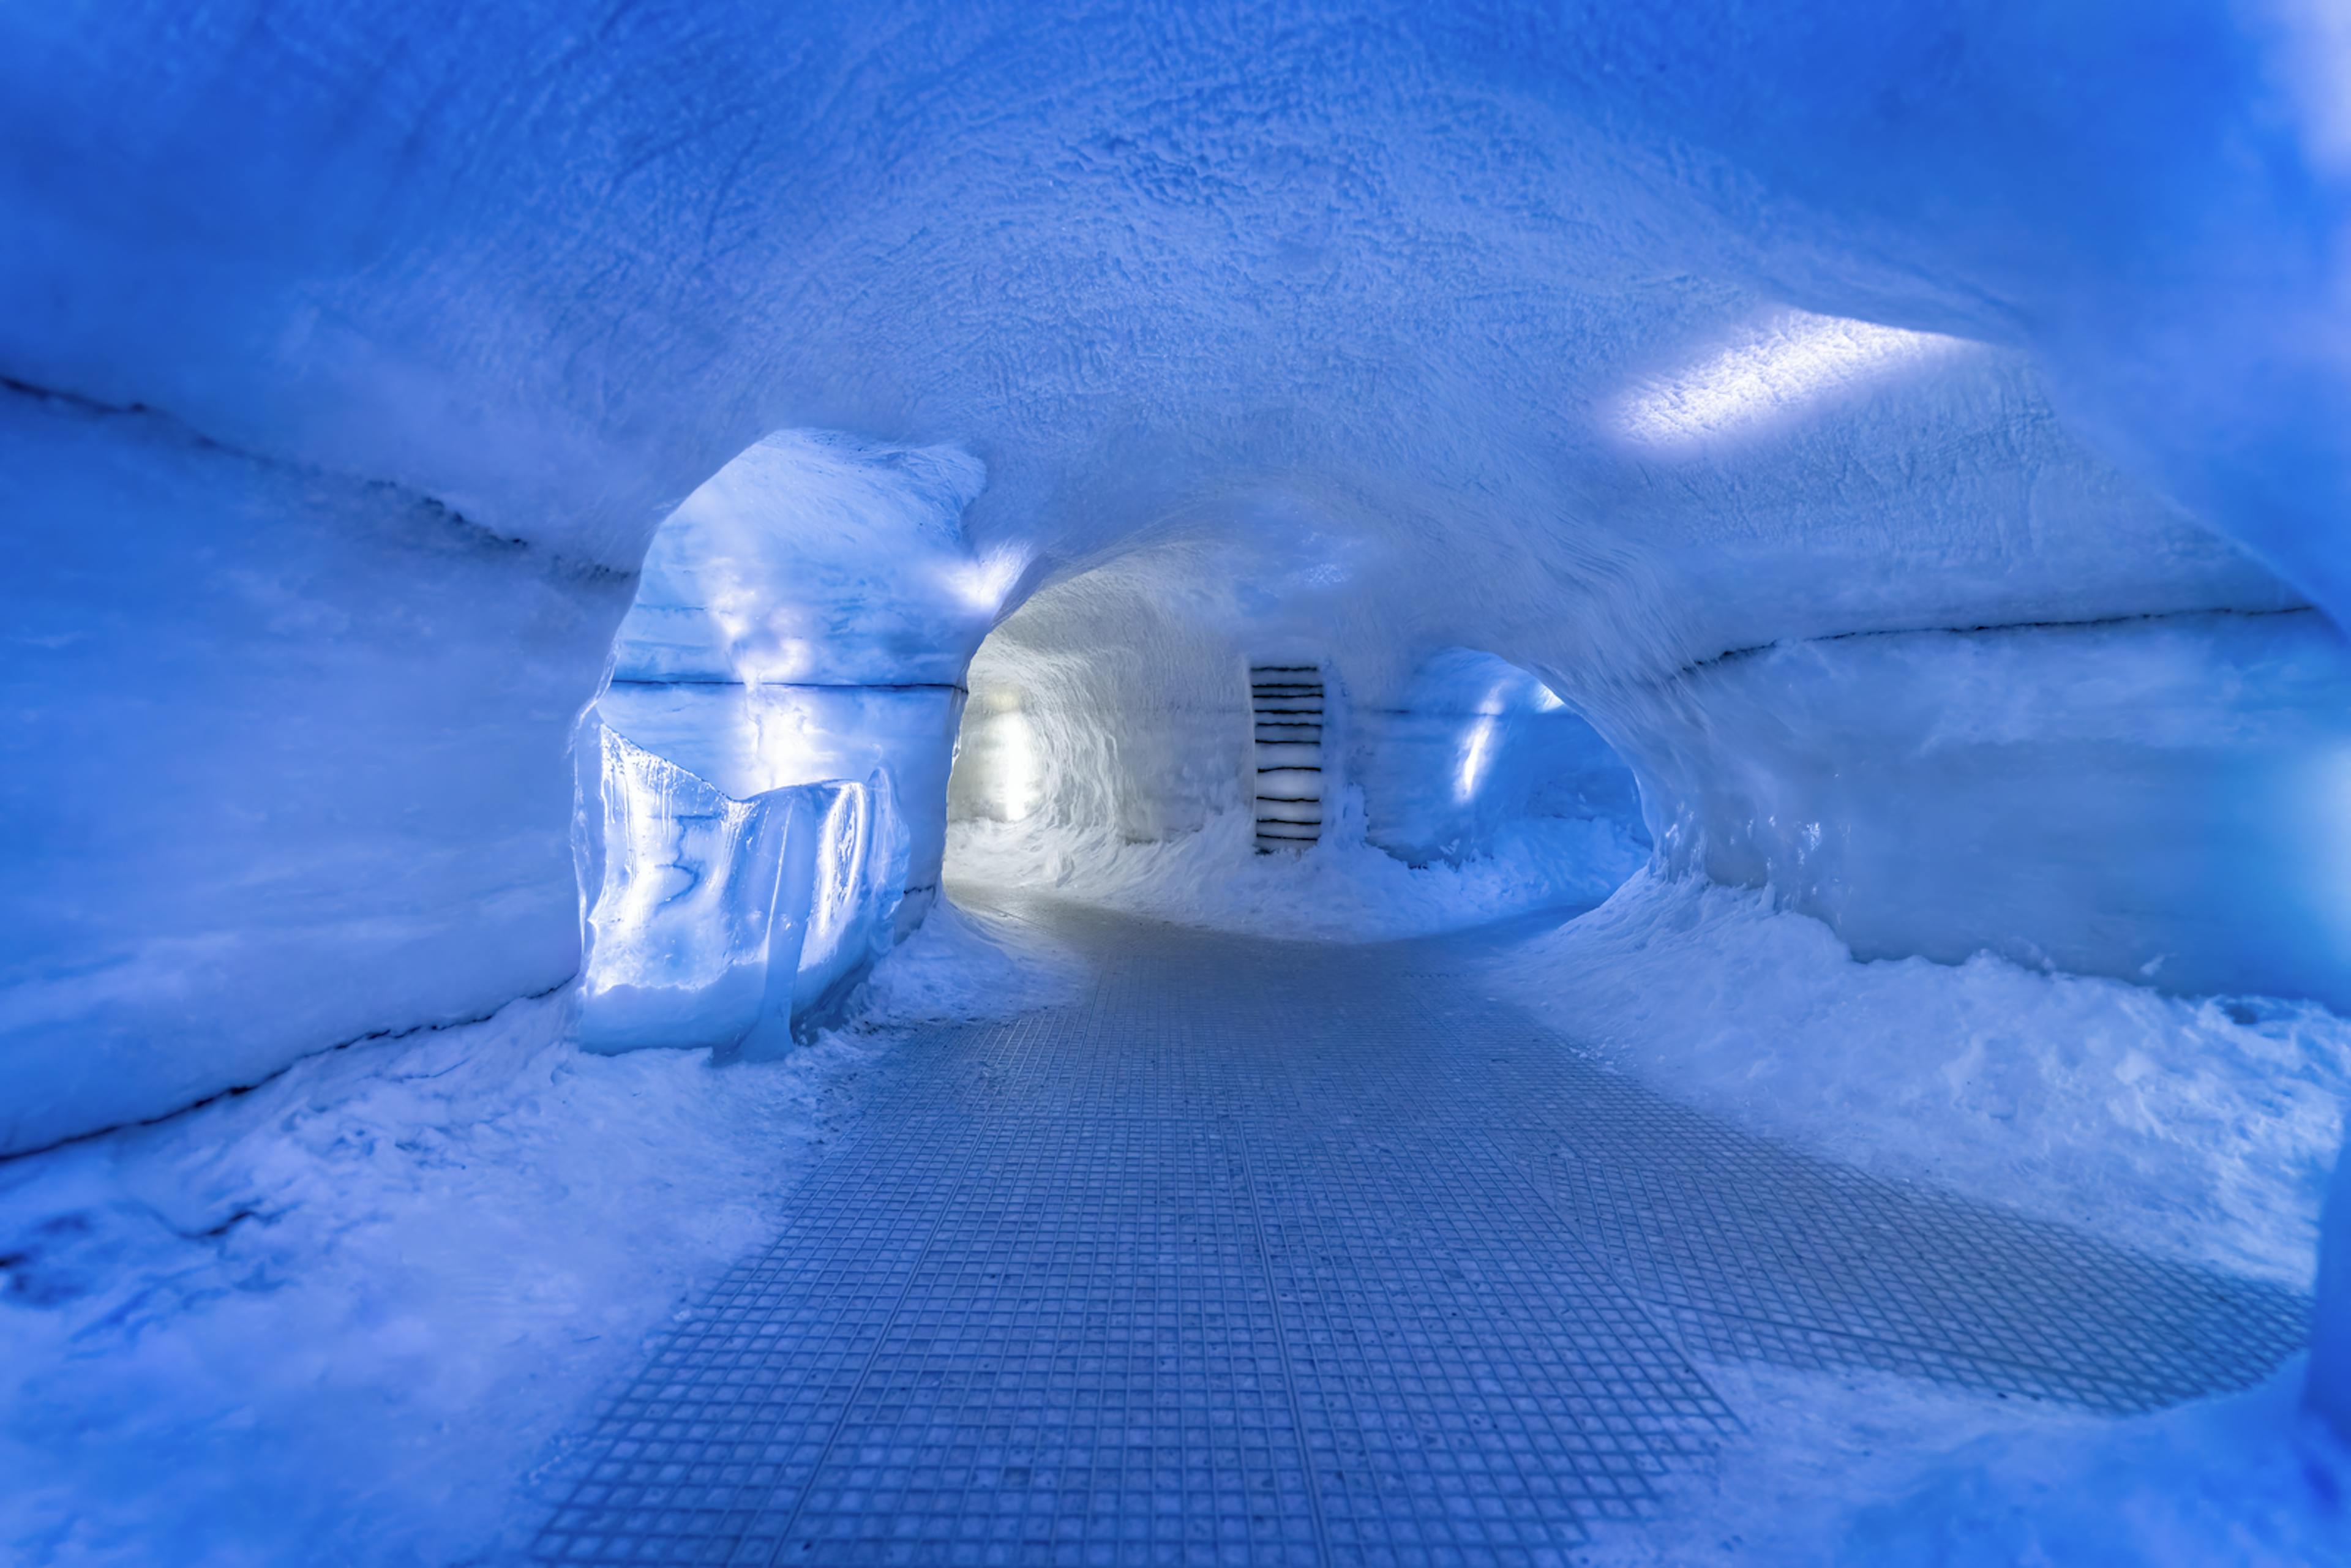 Inside the ice cave exhibit in reykjavík